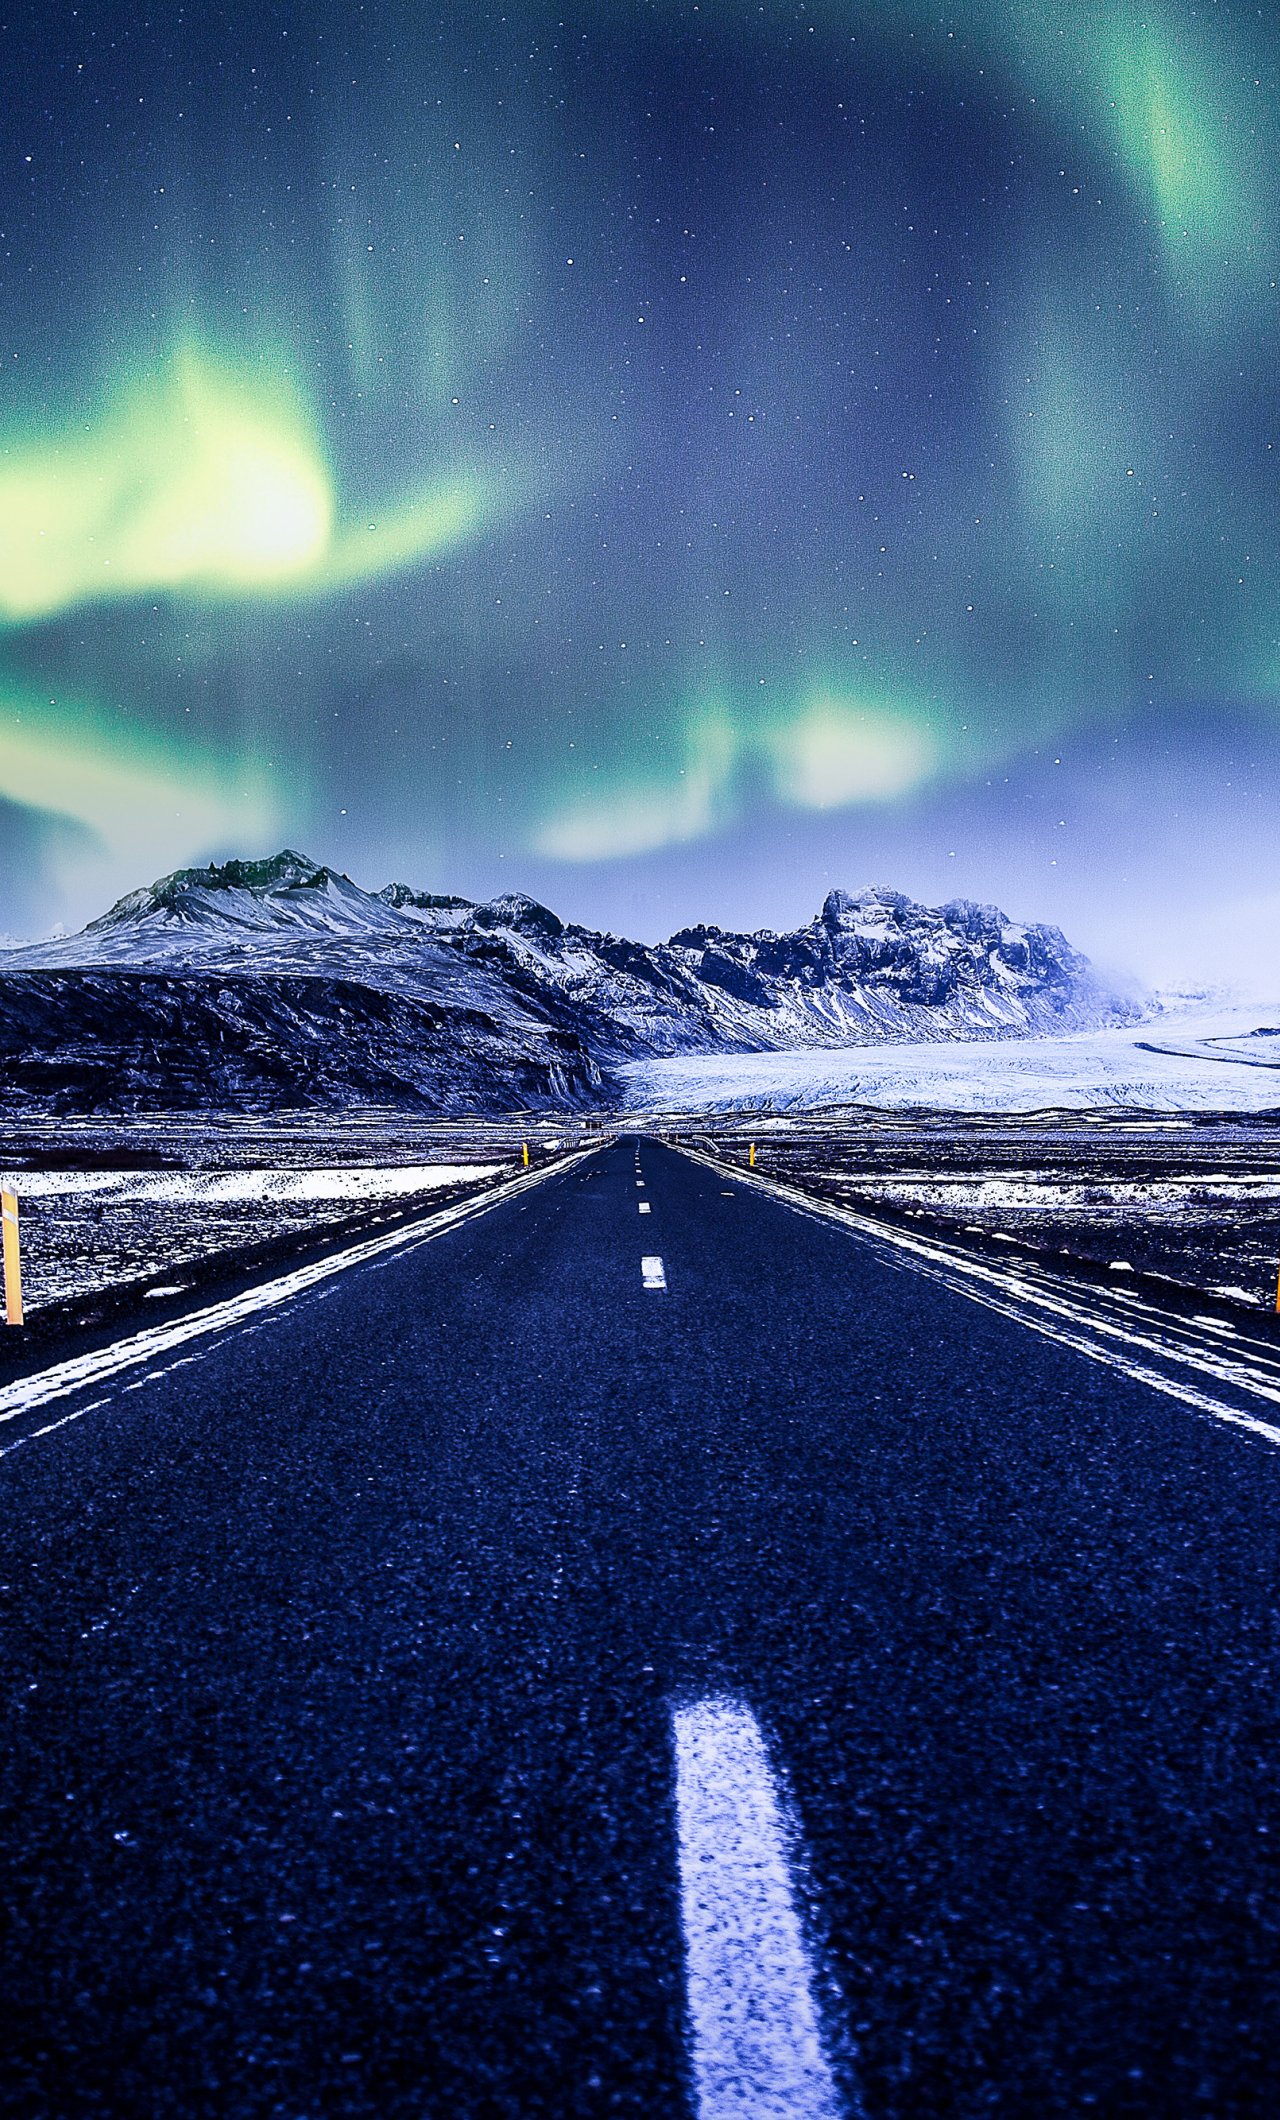 Download wallpaper 1280x2120 aurora borealis, northern lights, highway, road, winter, iphone 6 plus, 1280x2120 HD background, 14912